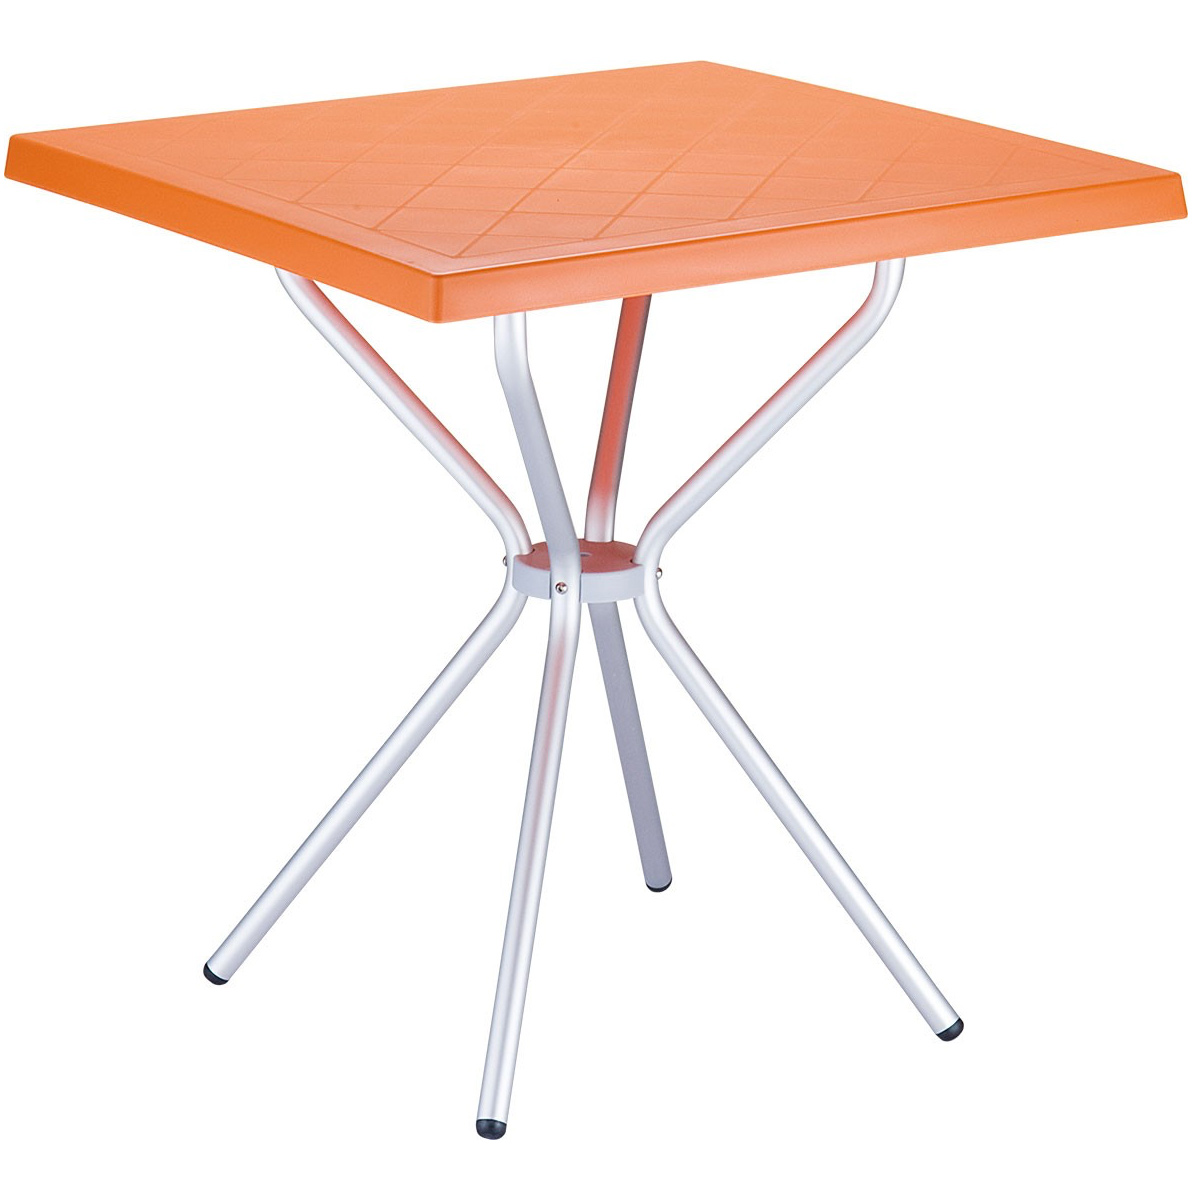 Пластиковый кухонный стол. Стол для кафе 700х700. Стол Siesta. Стол Сиеста 85. Оранжевый стол.